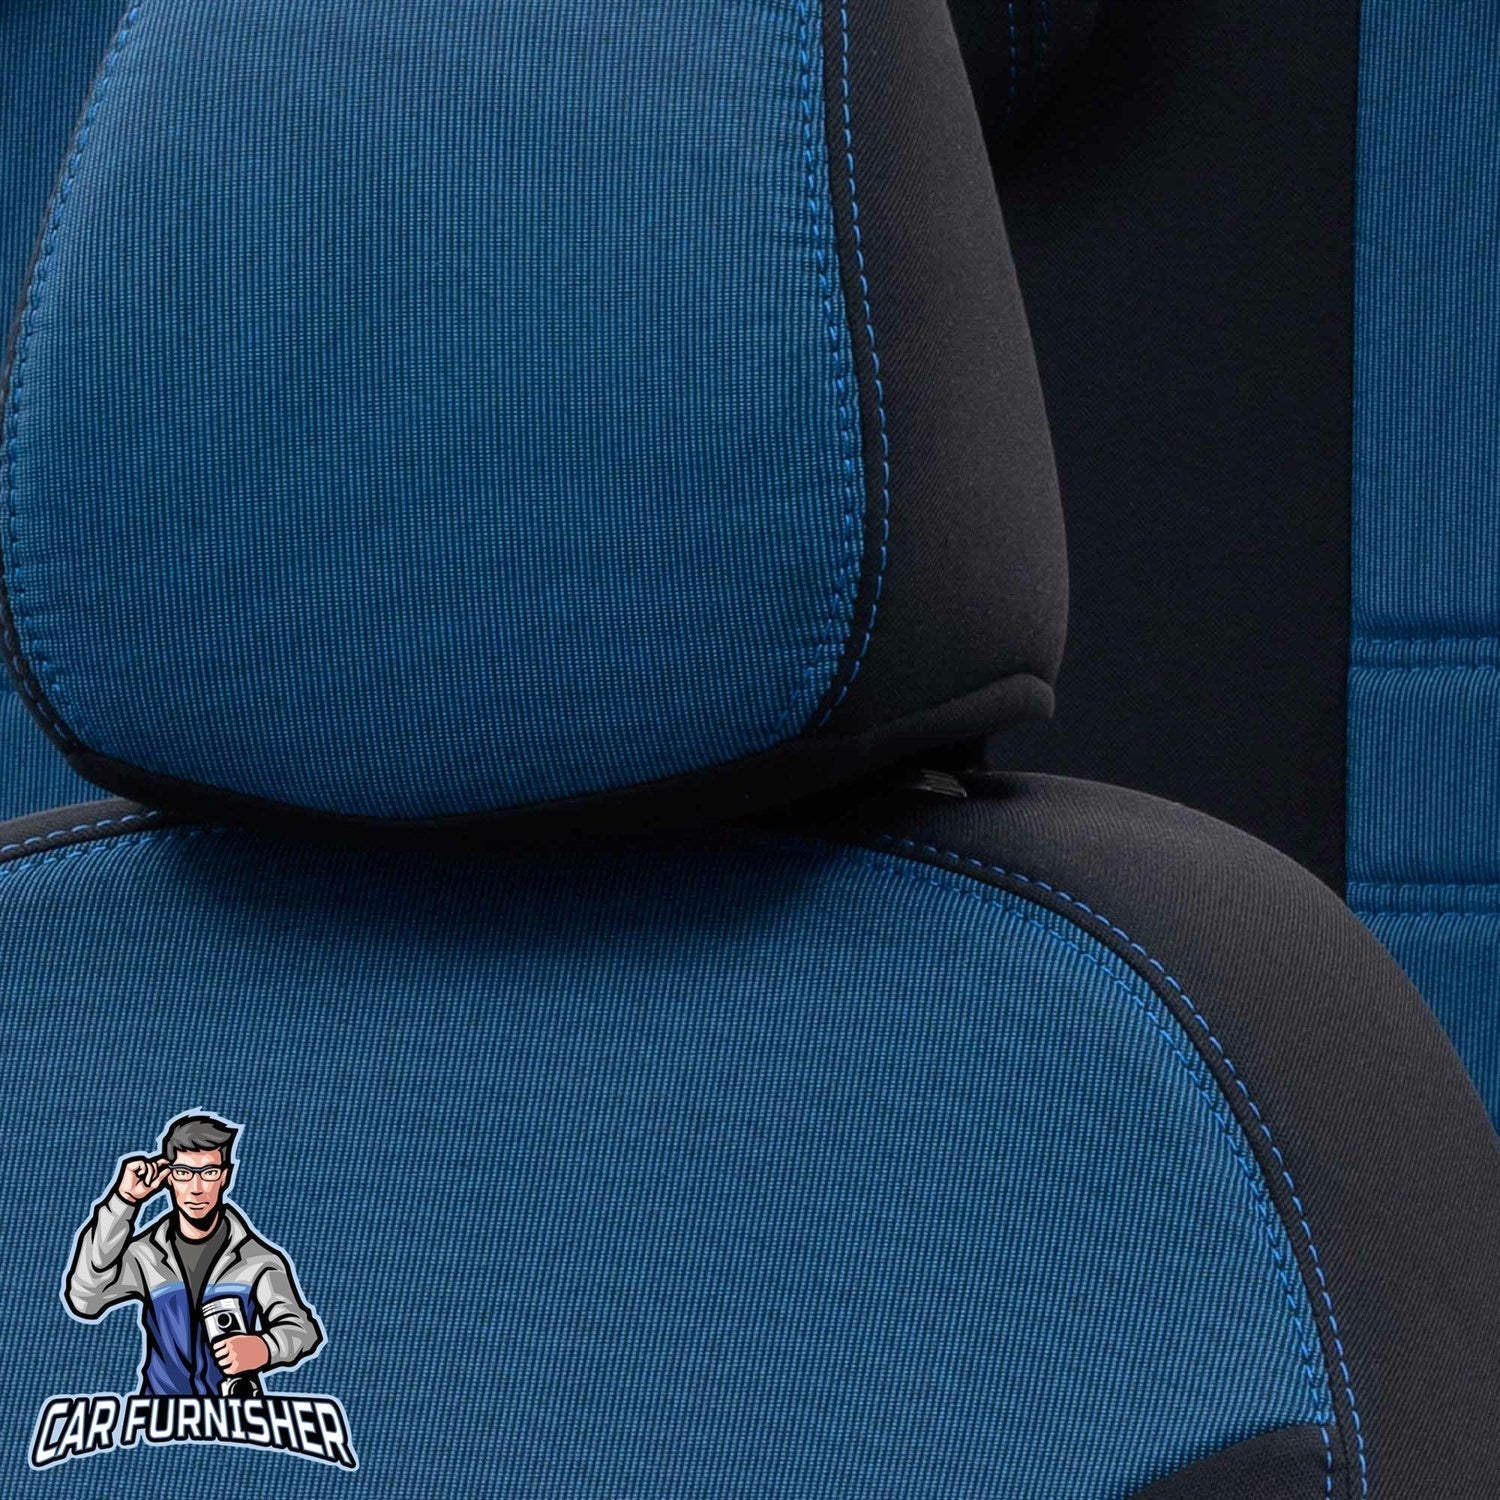 Isuzu N35 Seat Cover Original Jacquard Design Blue Jacquard Fabric